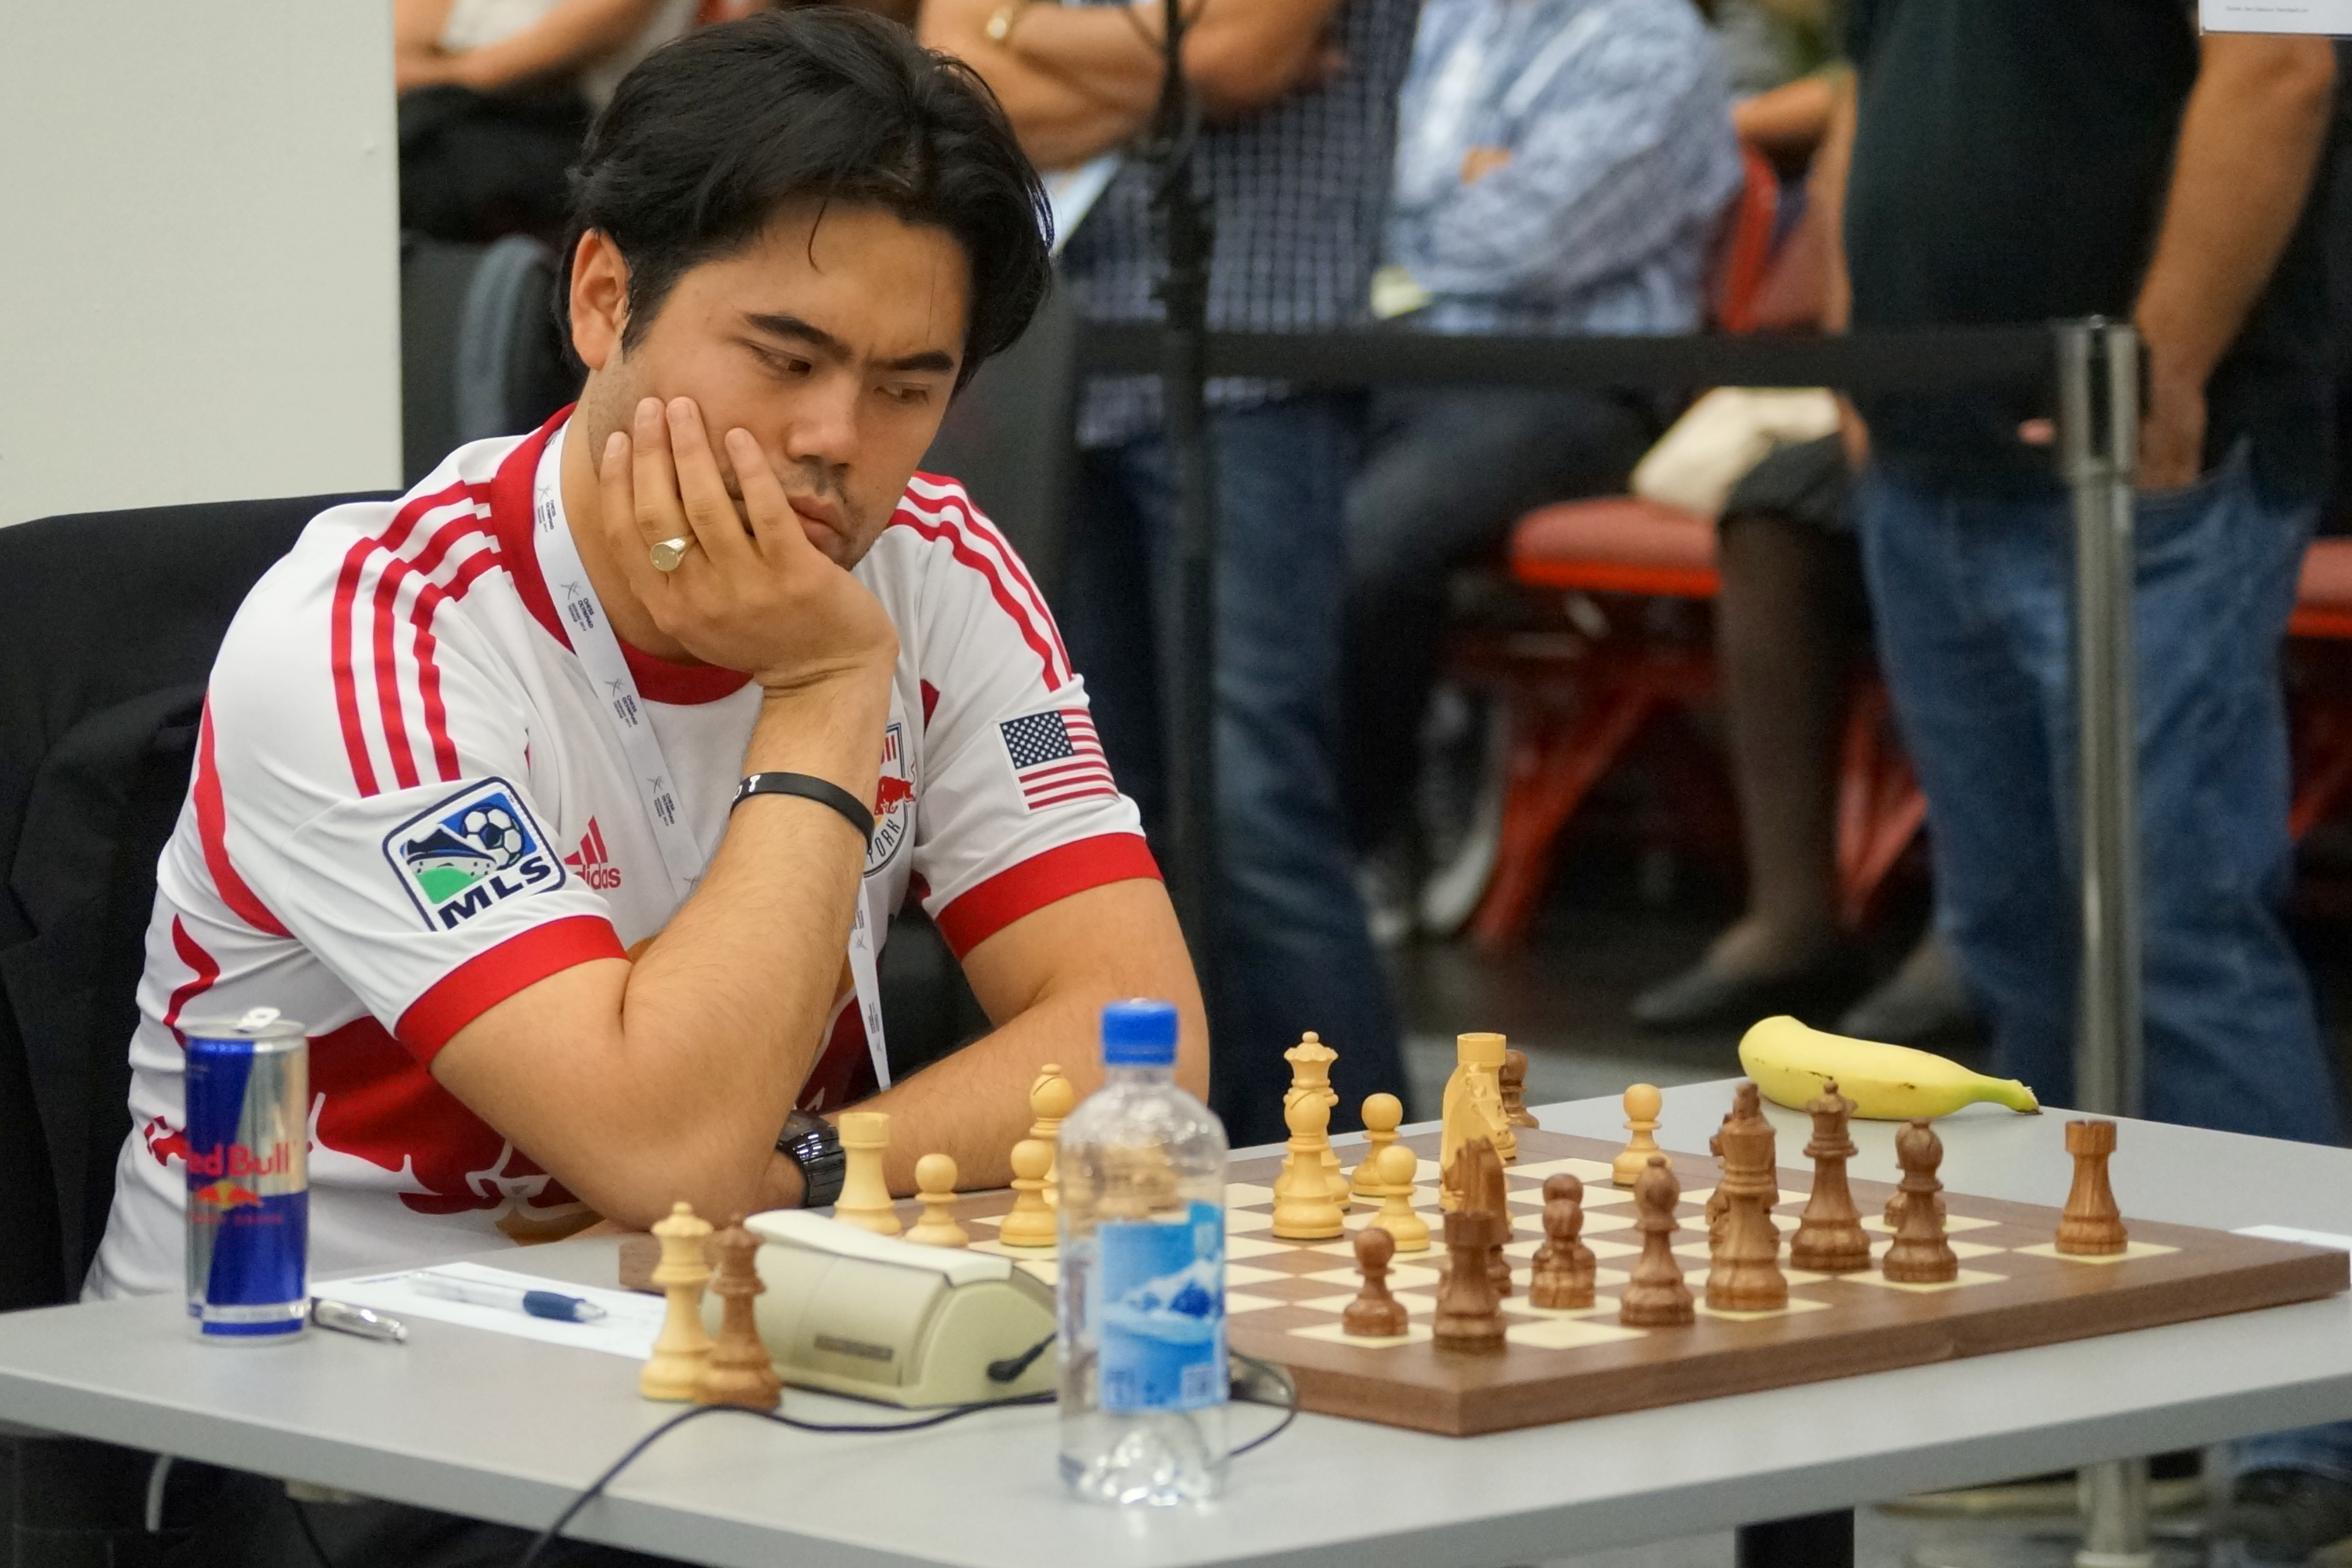 Hikaru Nakamura shows what 2700+ chess looks like in the 2018